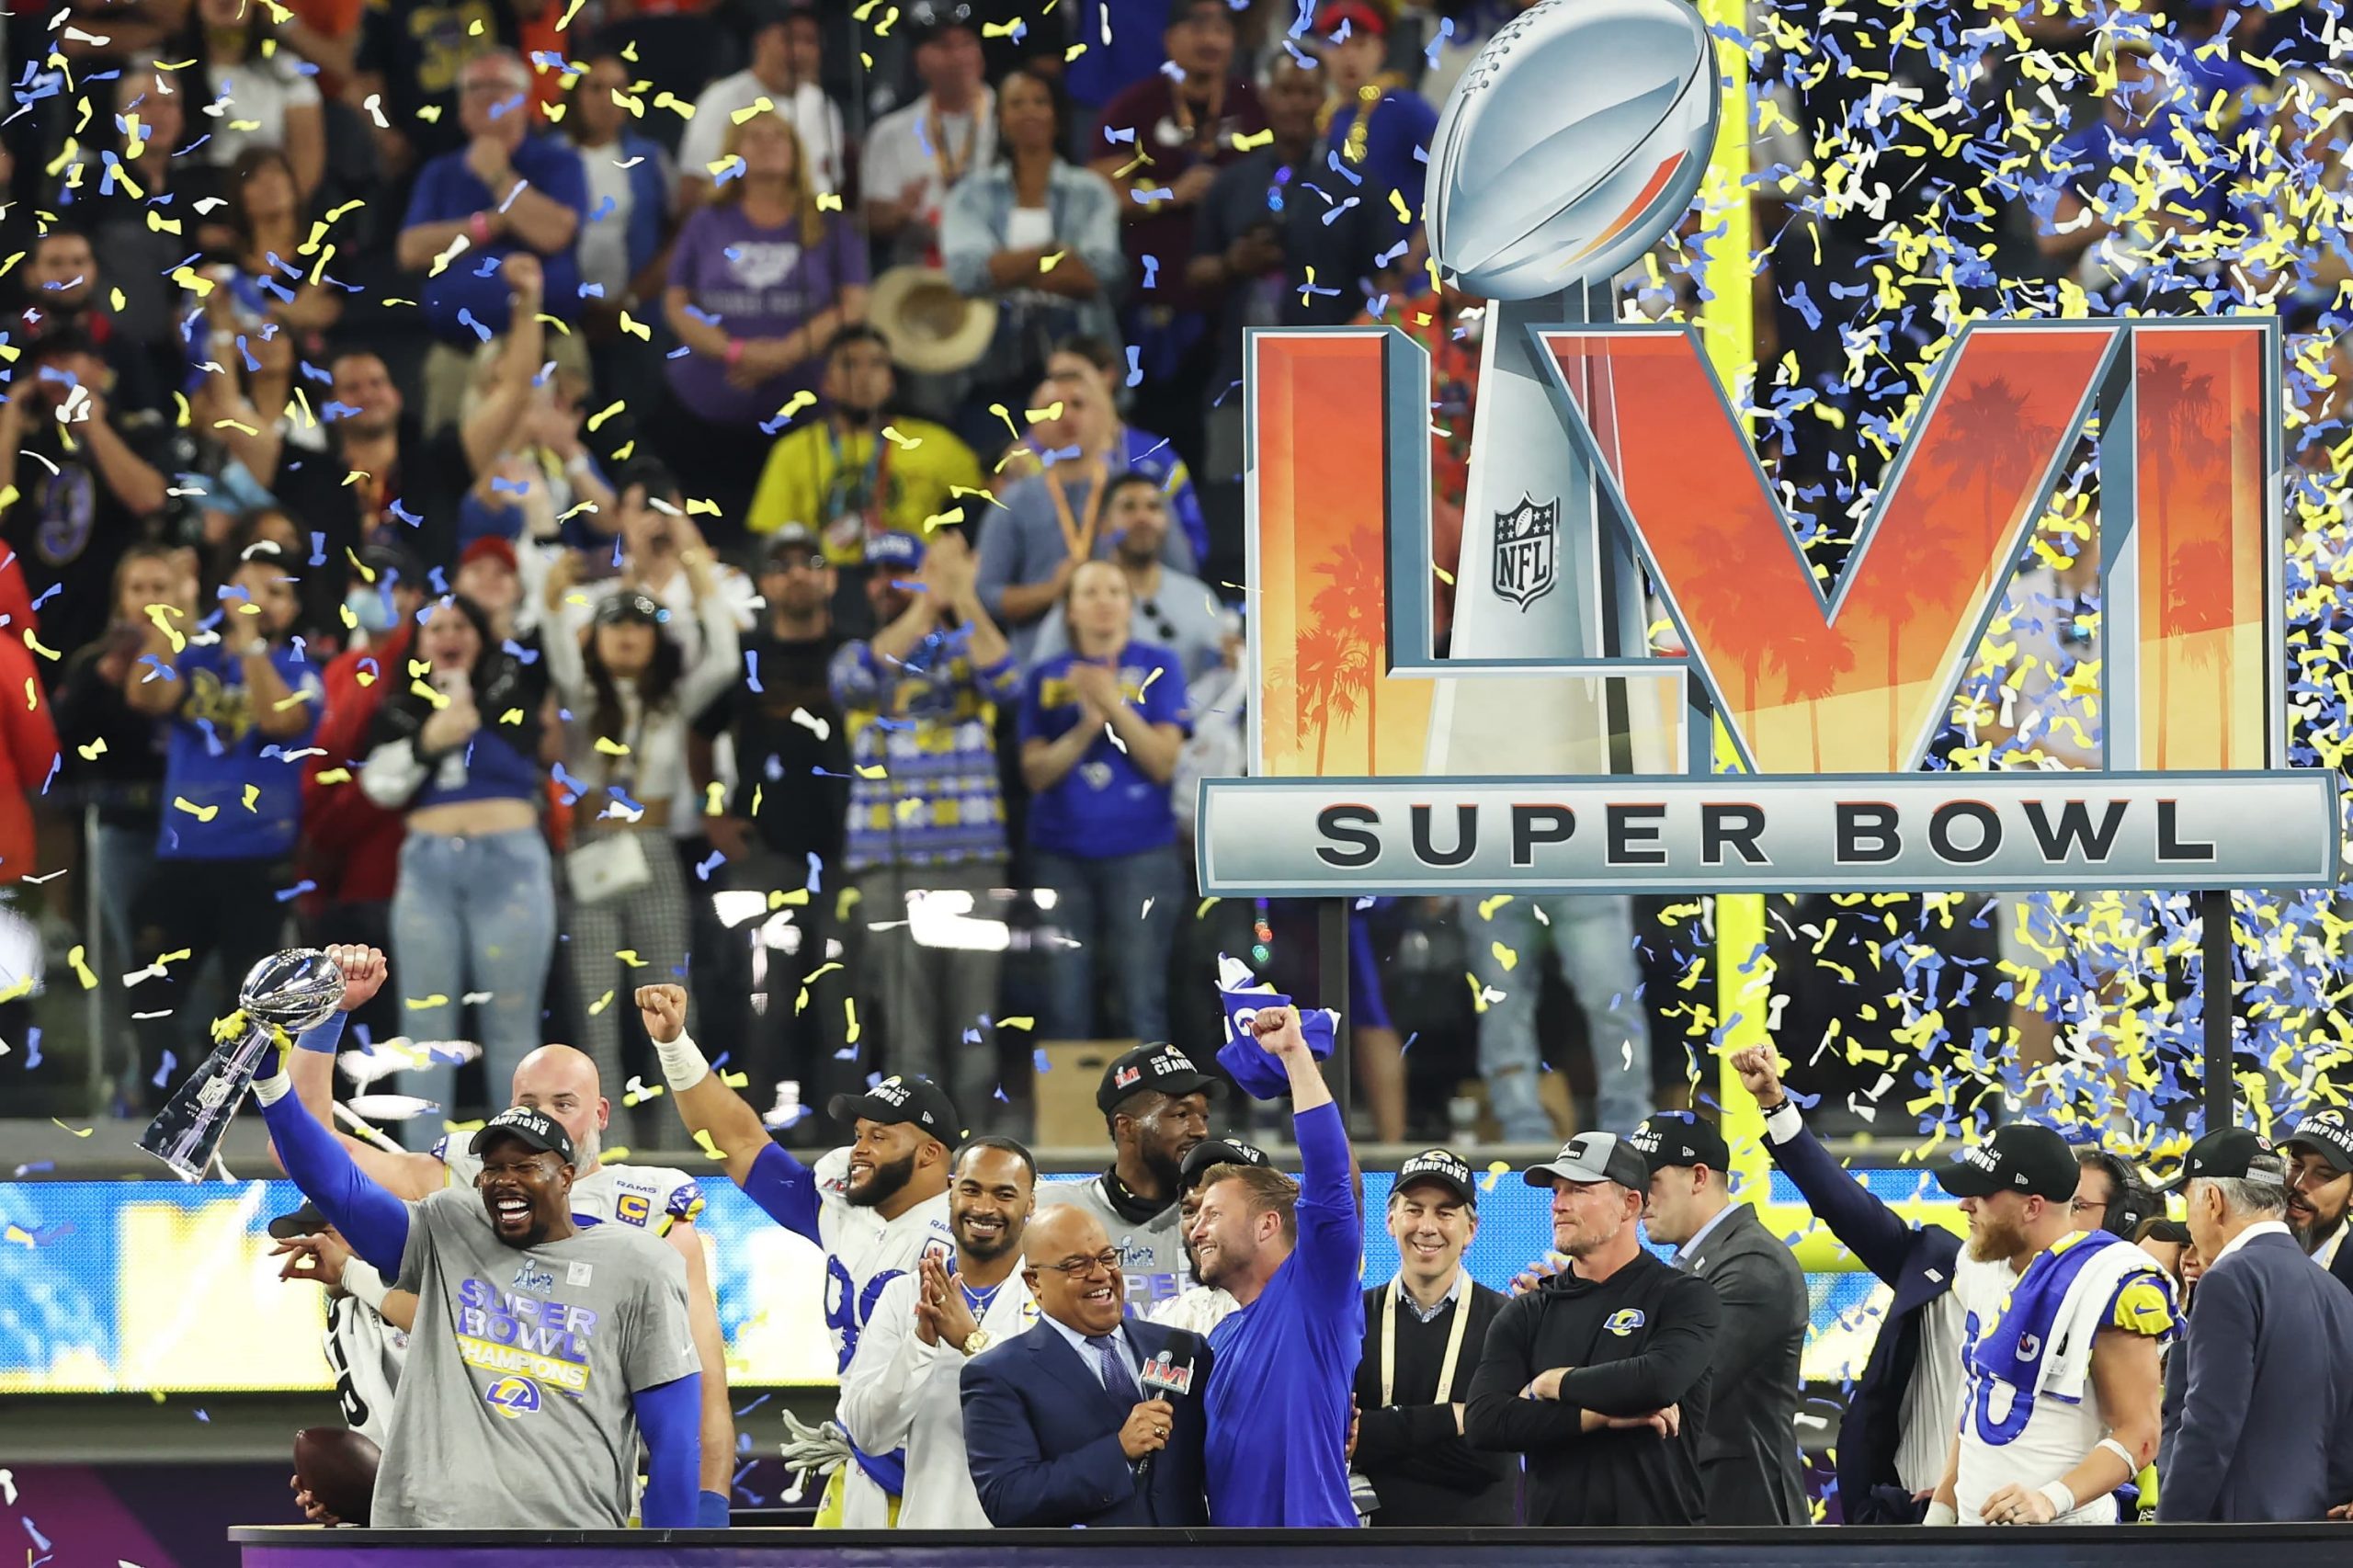 Nike, Pepsi dominate nontraditional media exposure during Super Bowl